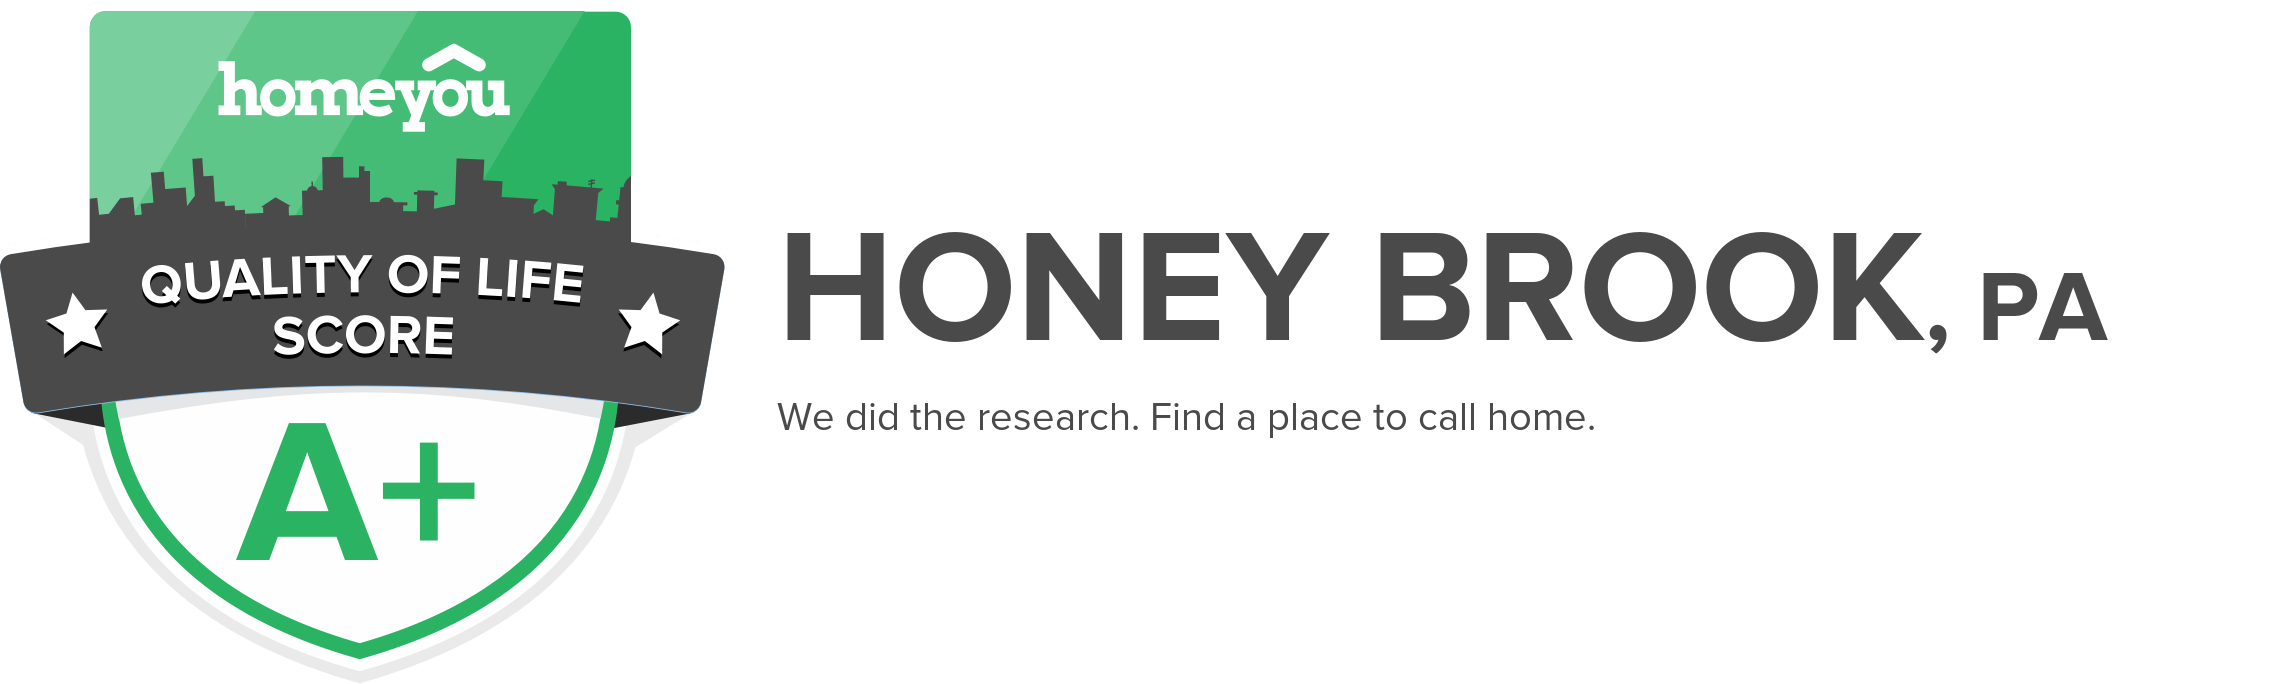 Honey Brook, PA